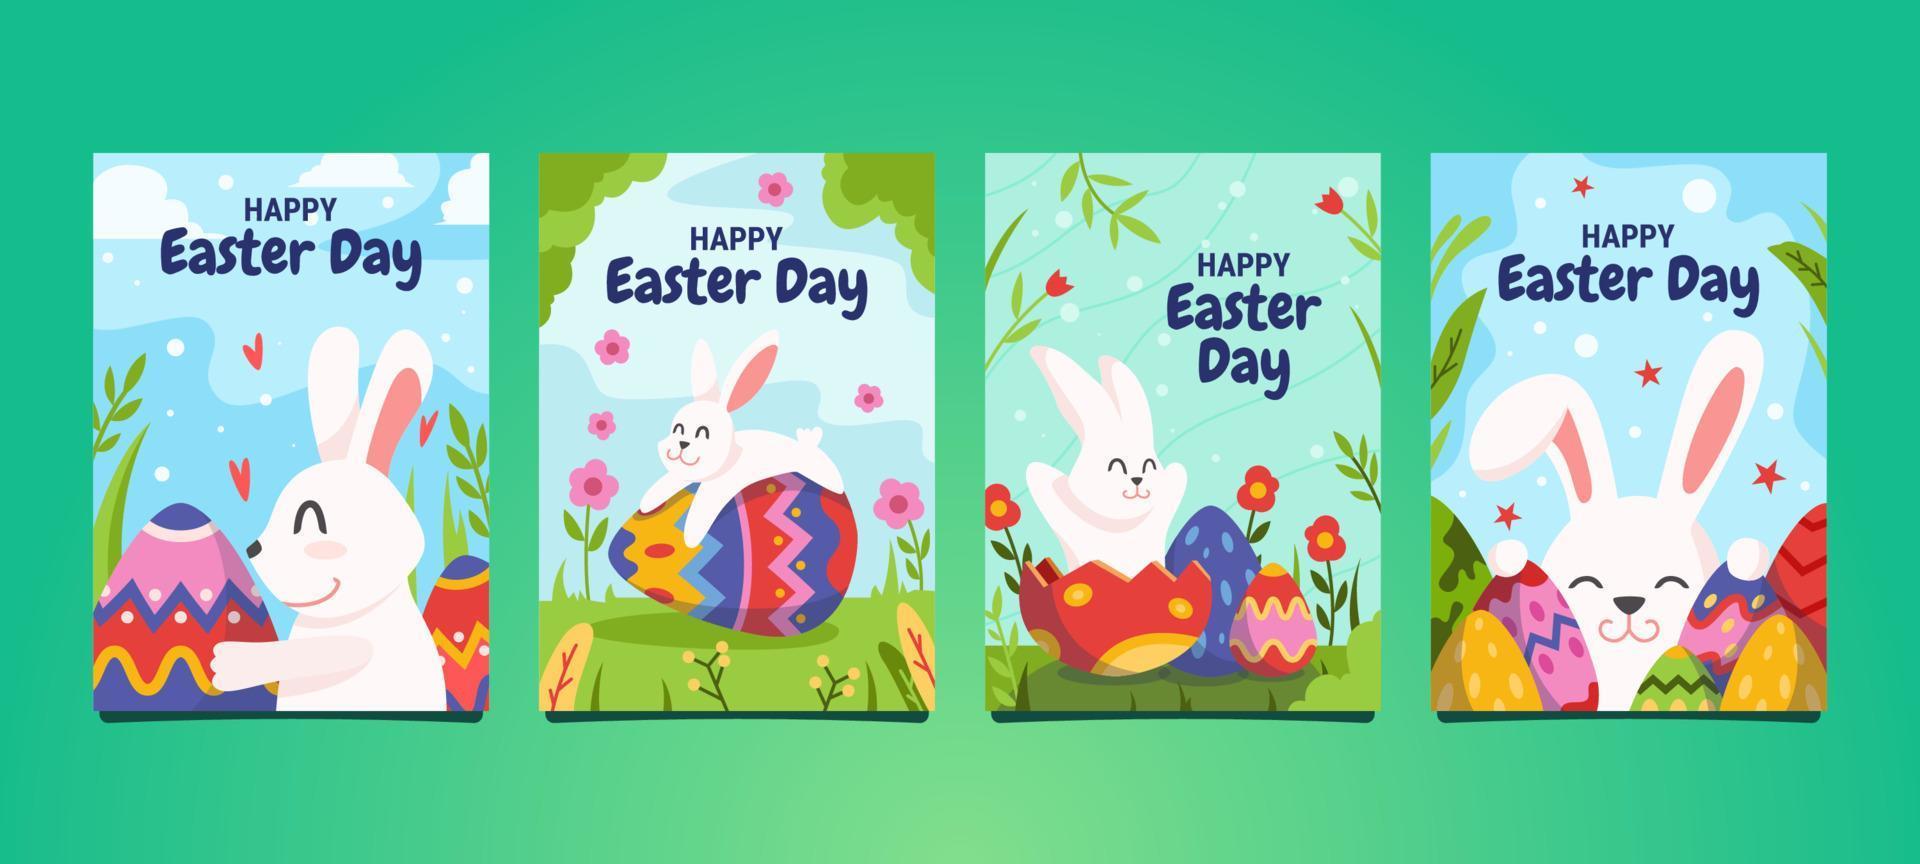 Cute Bunny Celebrating Easter in Greetings Card vector